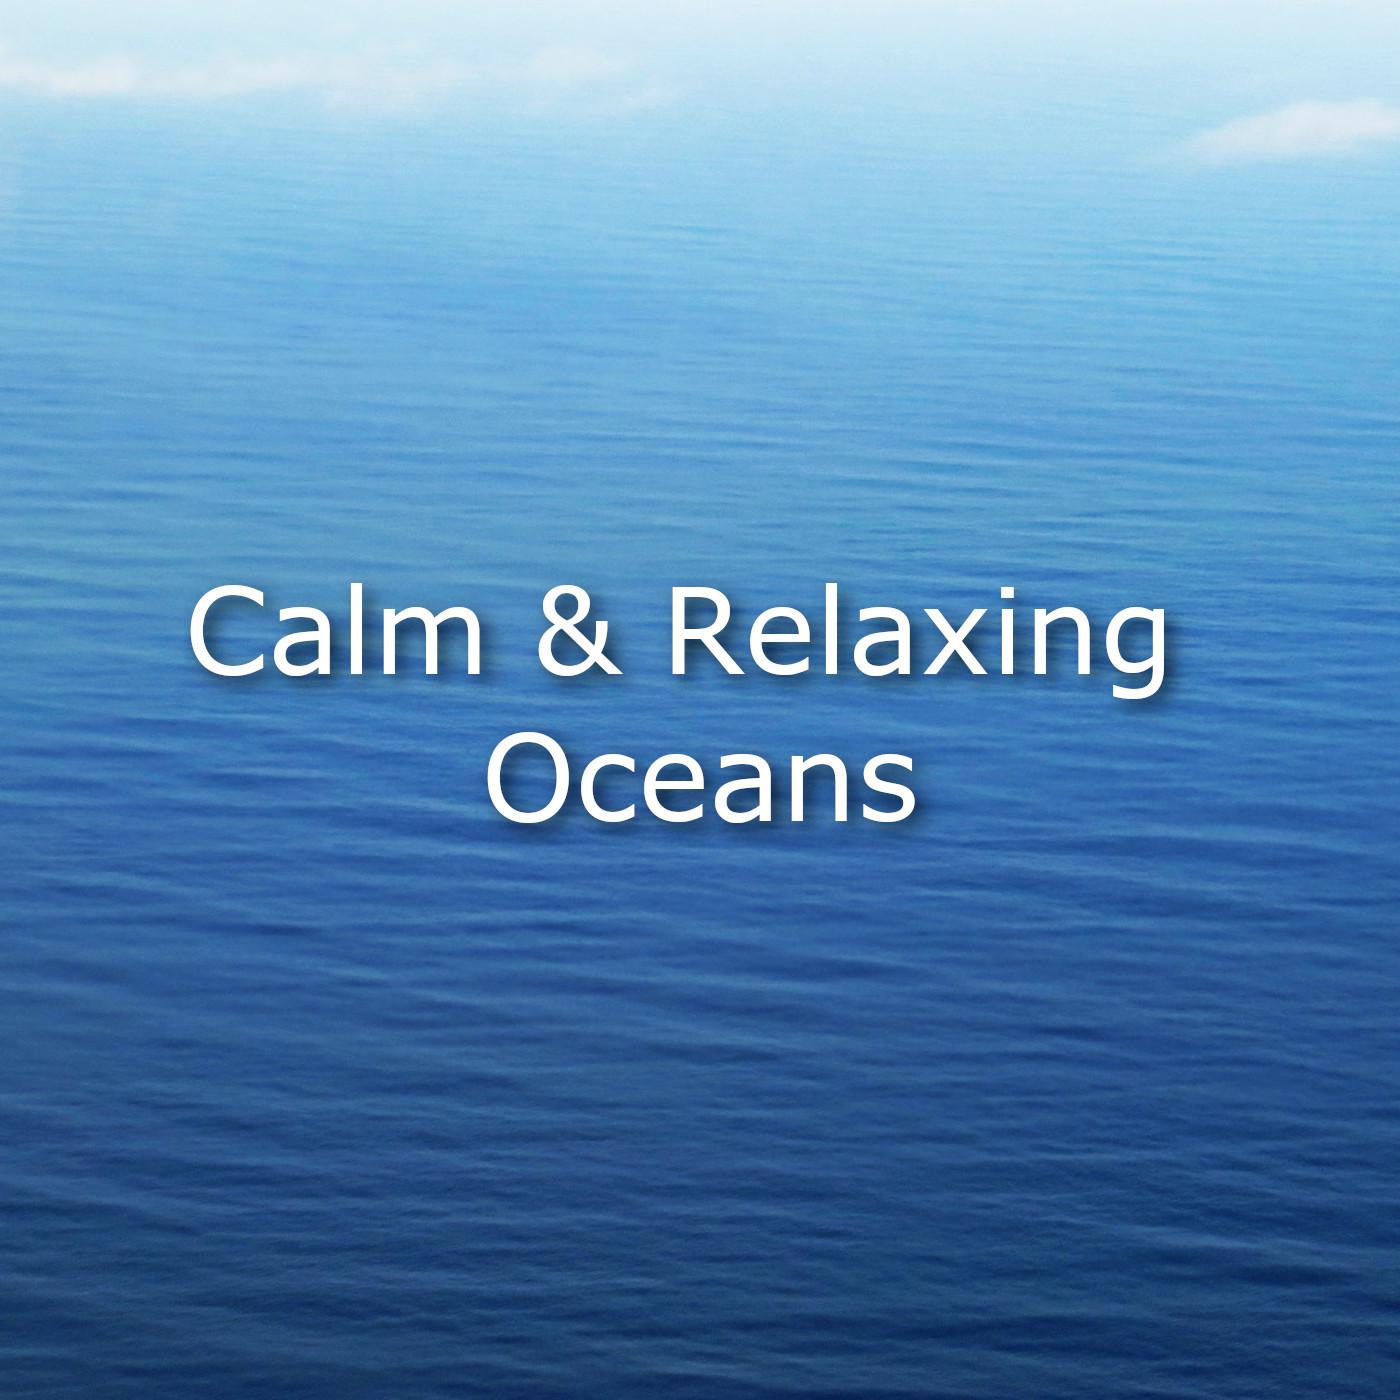 Calm & Relaxing Oceans